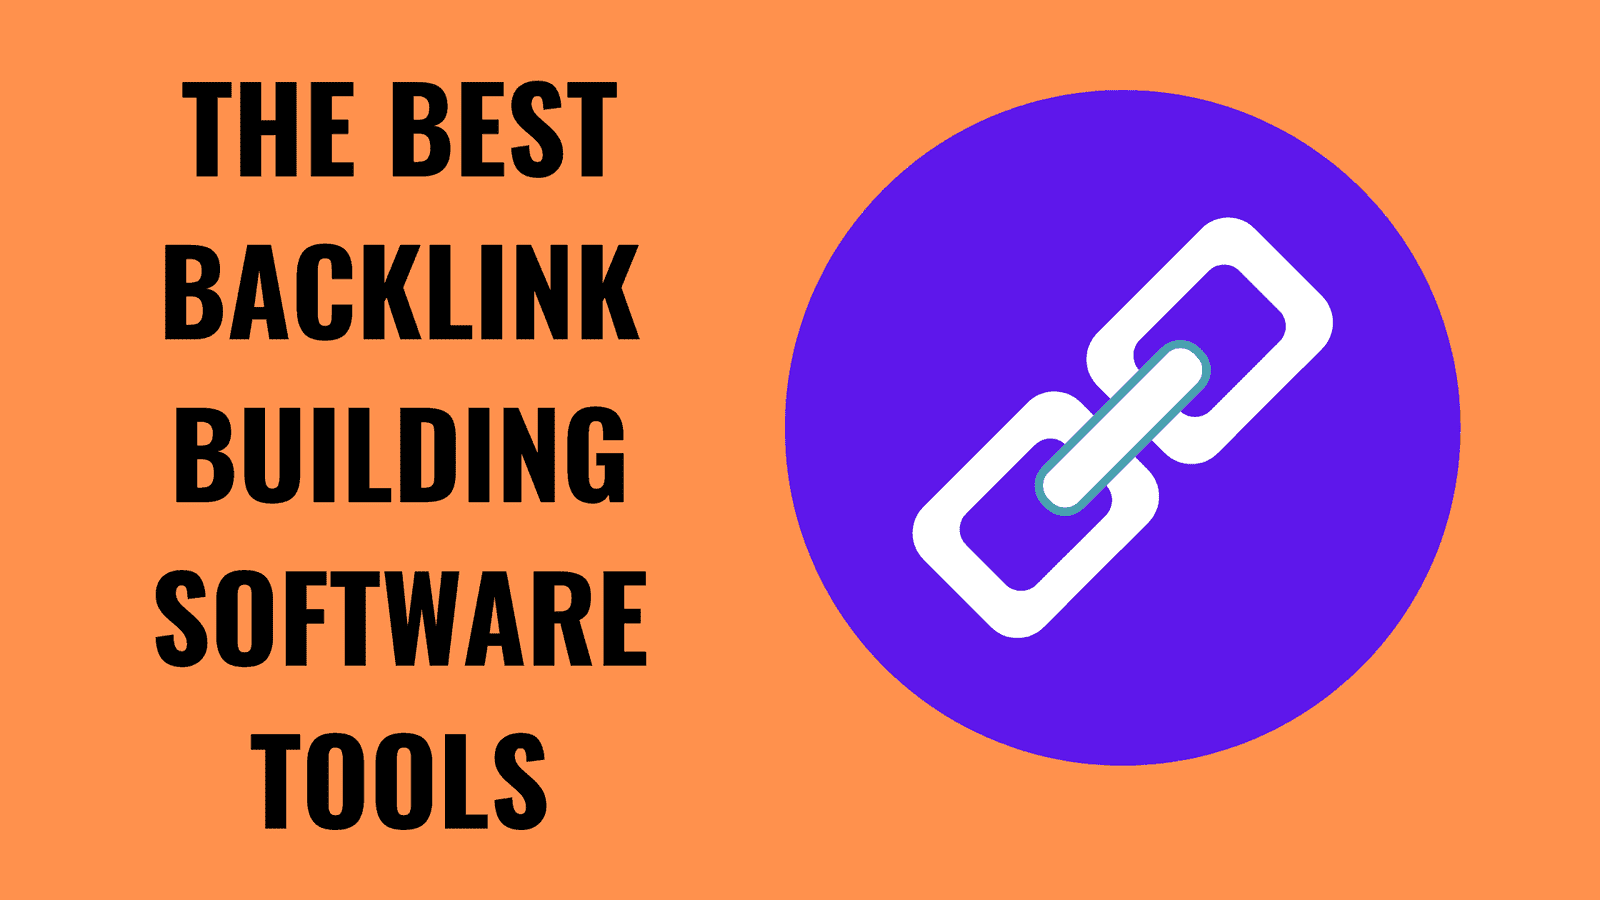 The Best Backlink Building Software Tools